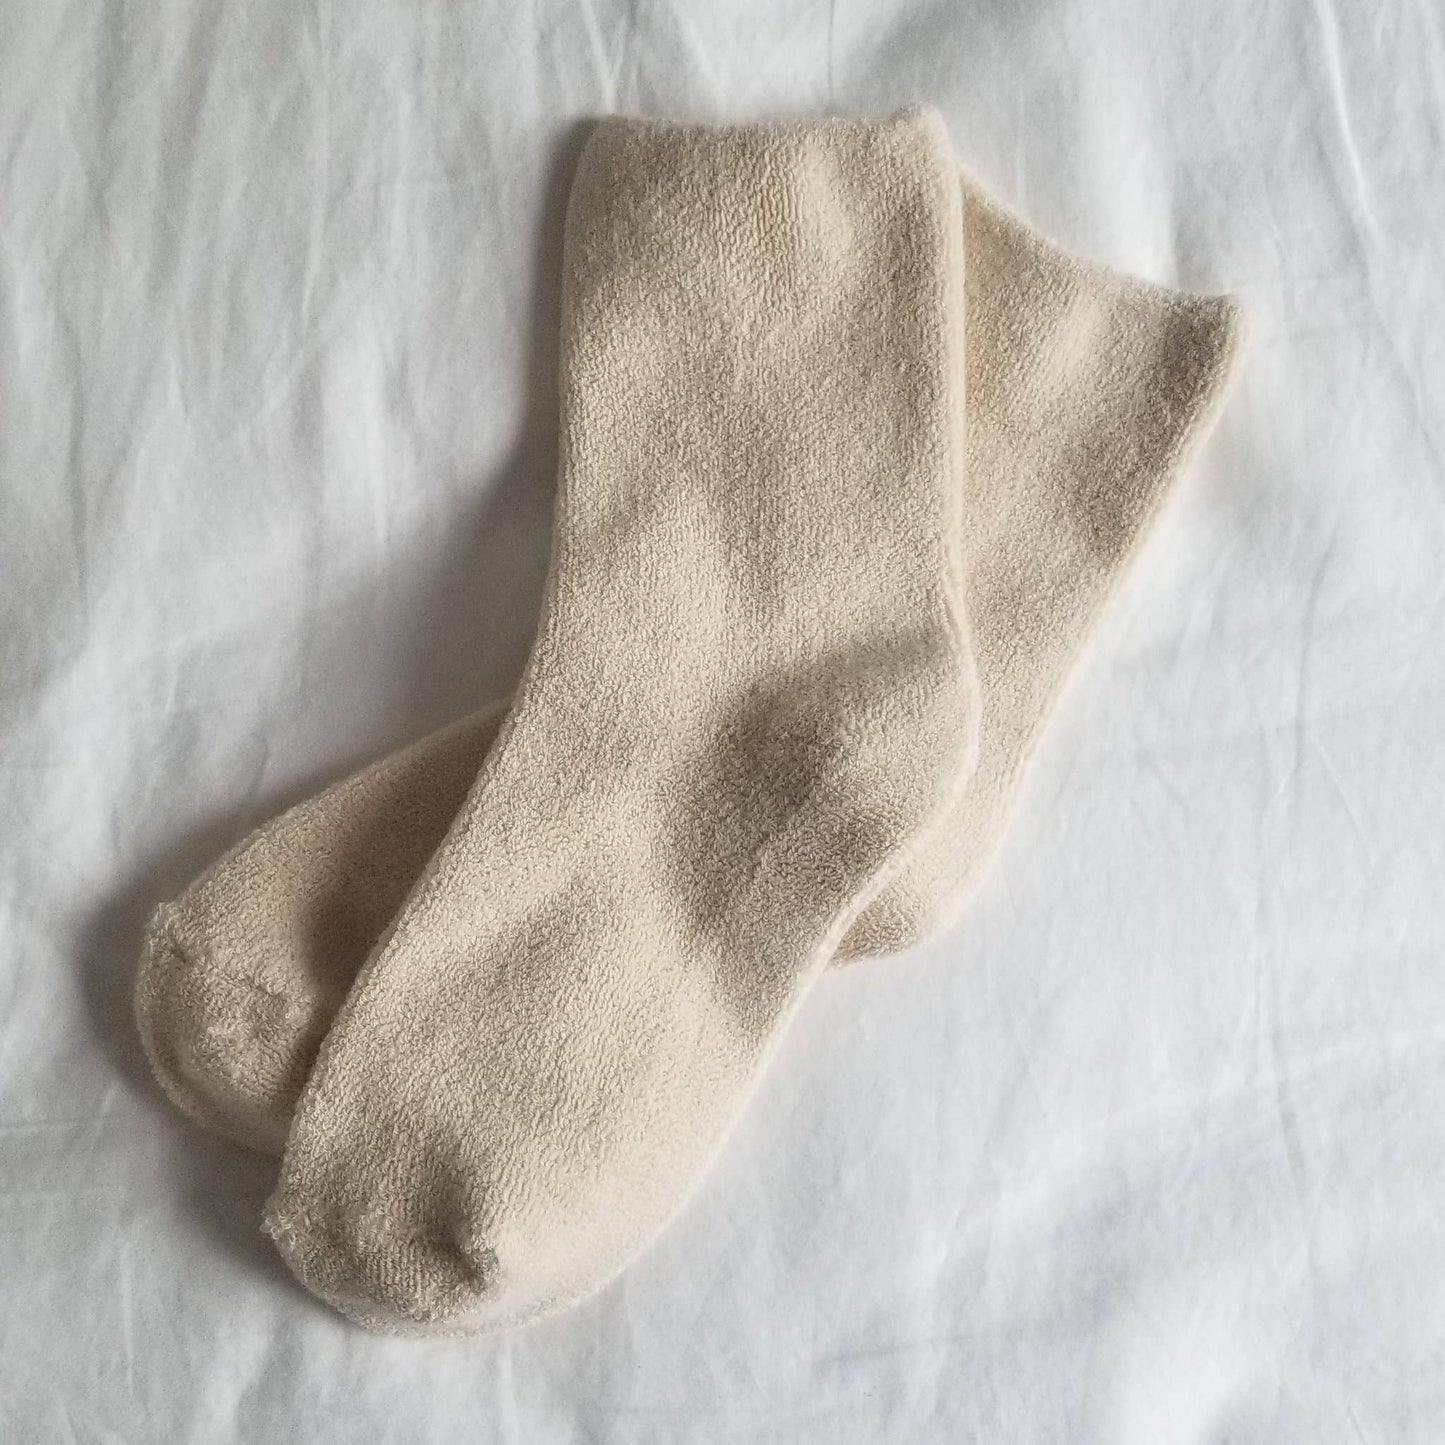 Heather Grey Cloud Socks